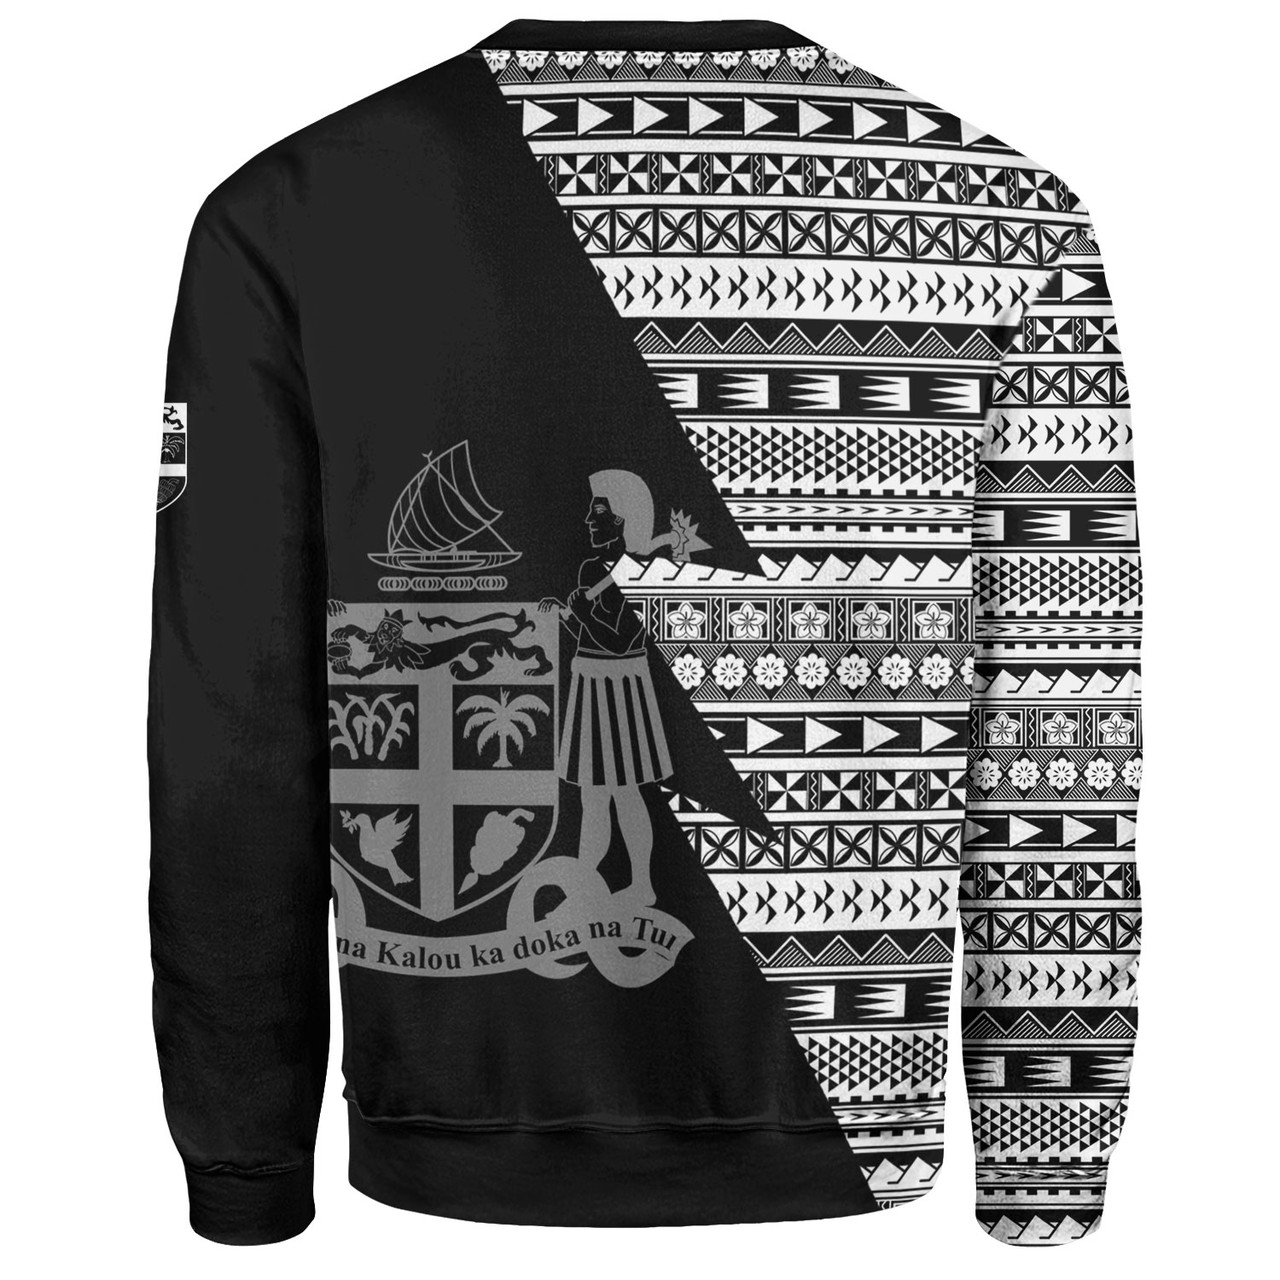 Fiji Custom Personalised Sweatshirt Flash Style